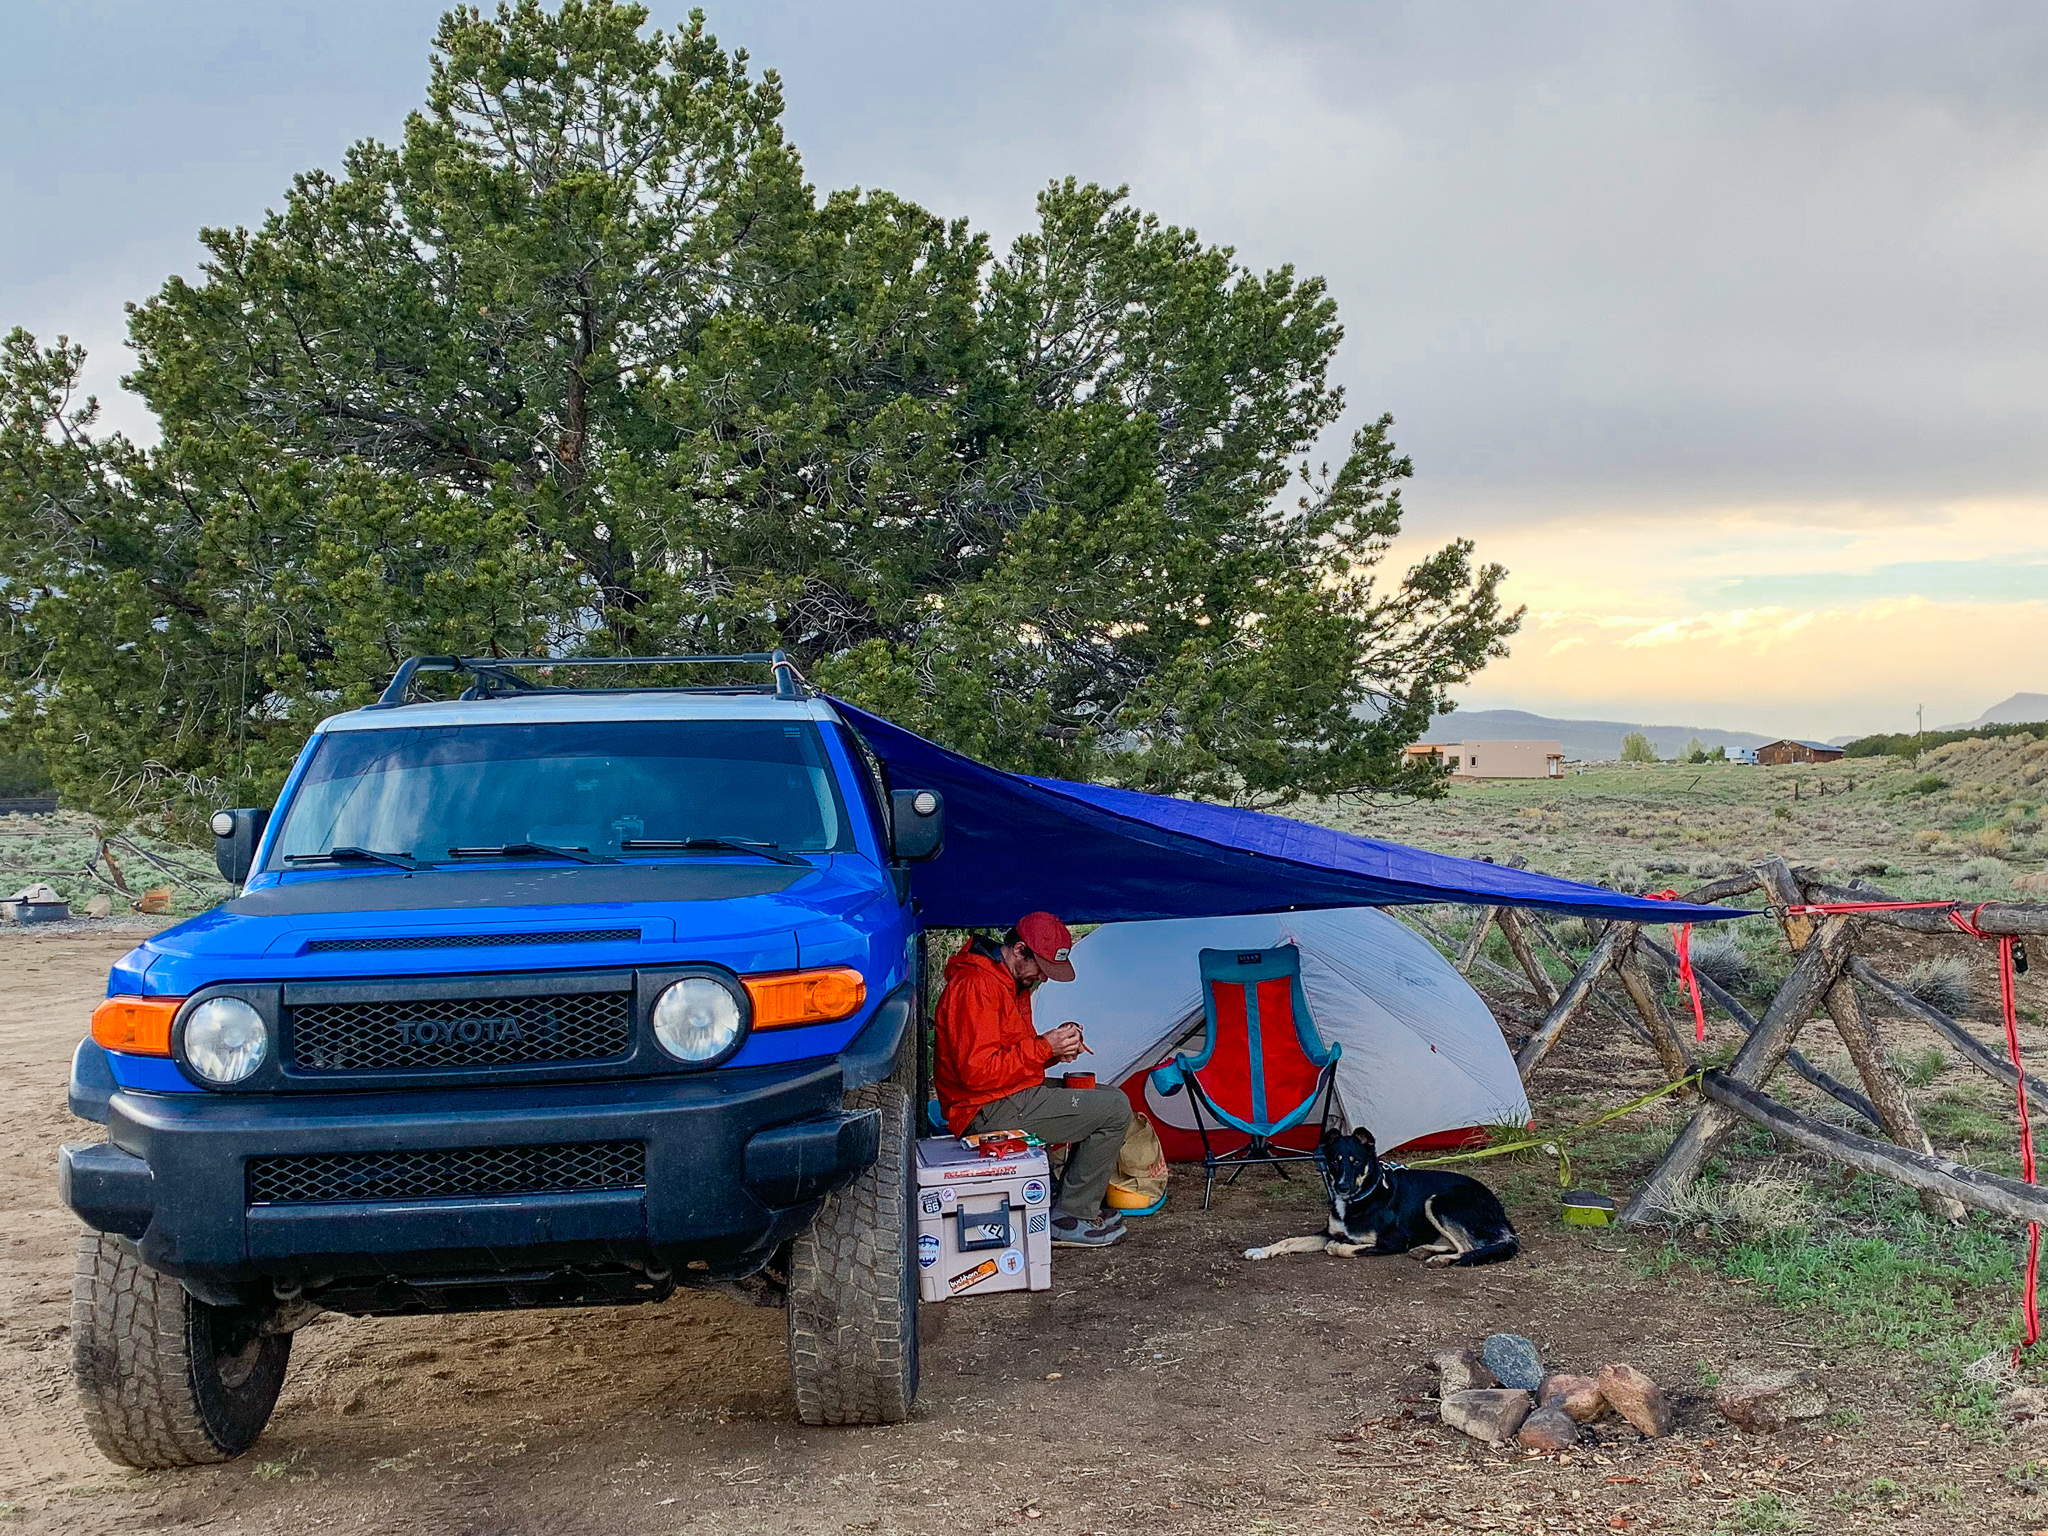 Camping at Elephant Rock campground near Salida, Colorado.